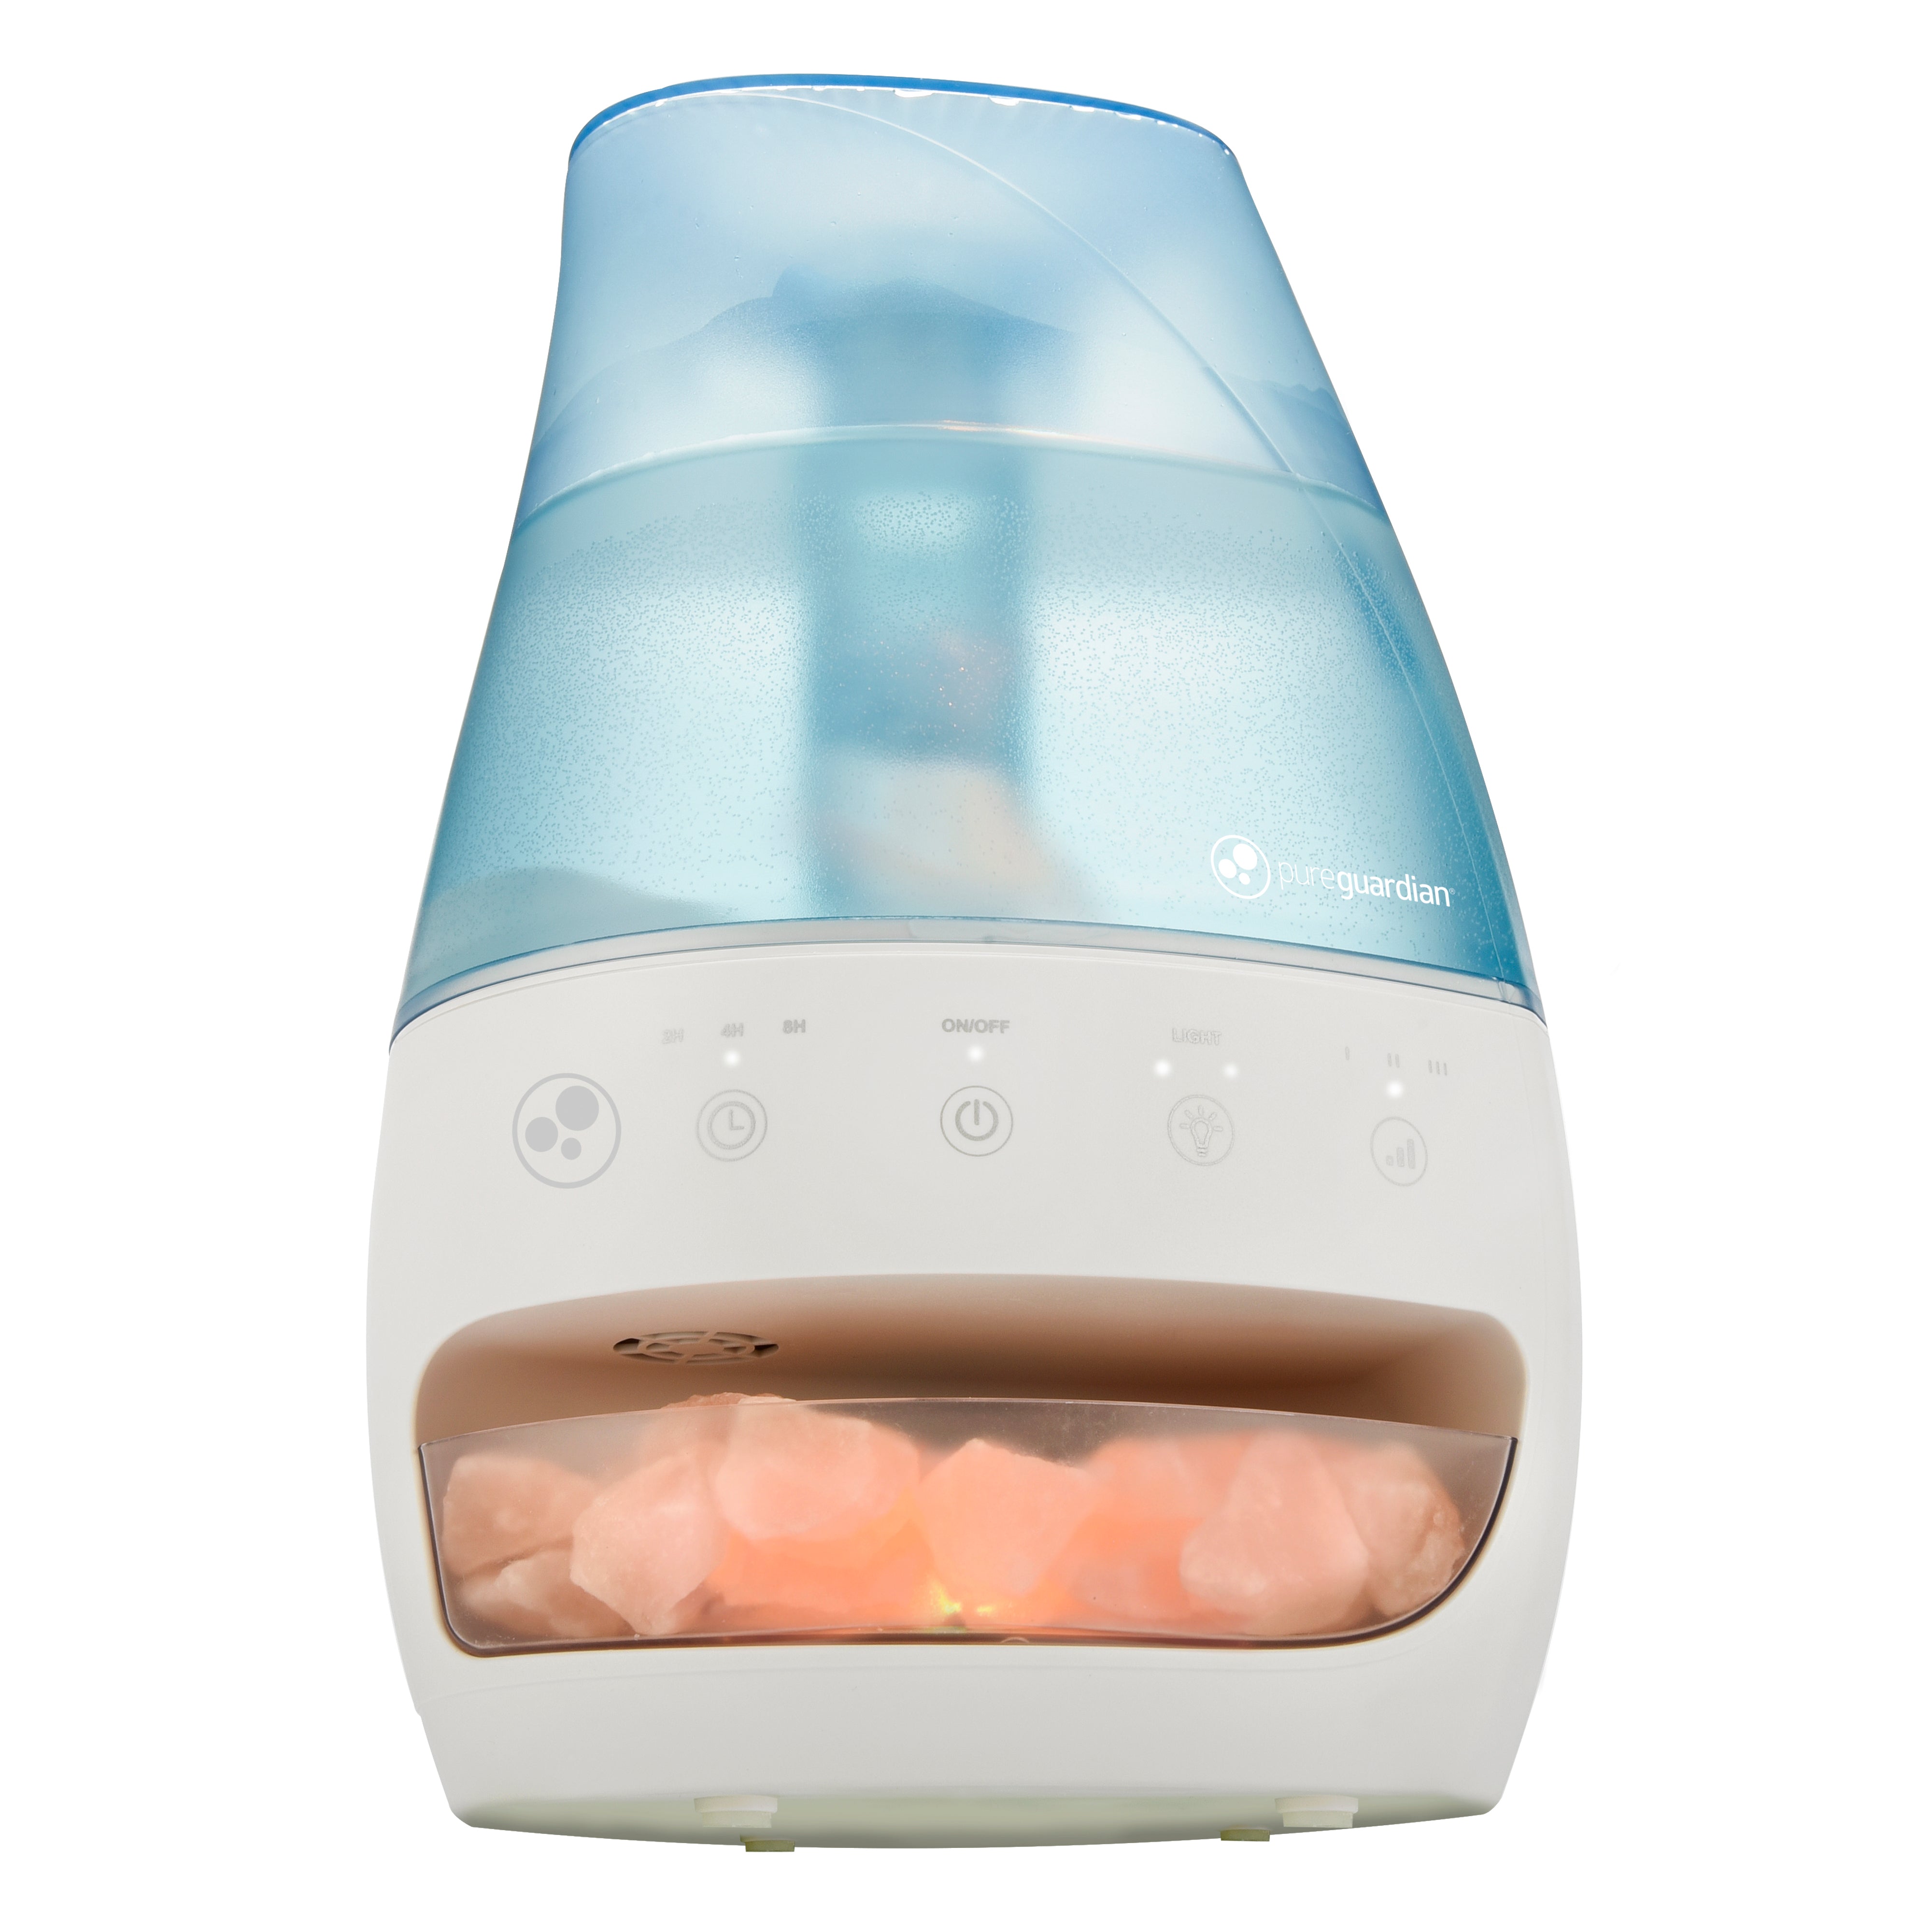 PureGuardian H1339 1 Gallon 3-in-1 Humidifier, Salt Lamp & Aromatherapy Tray